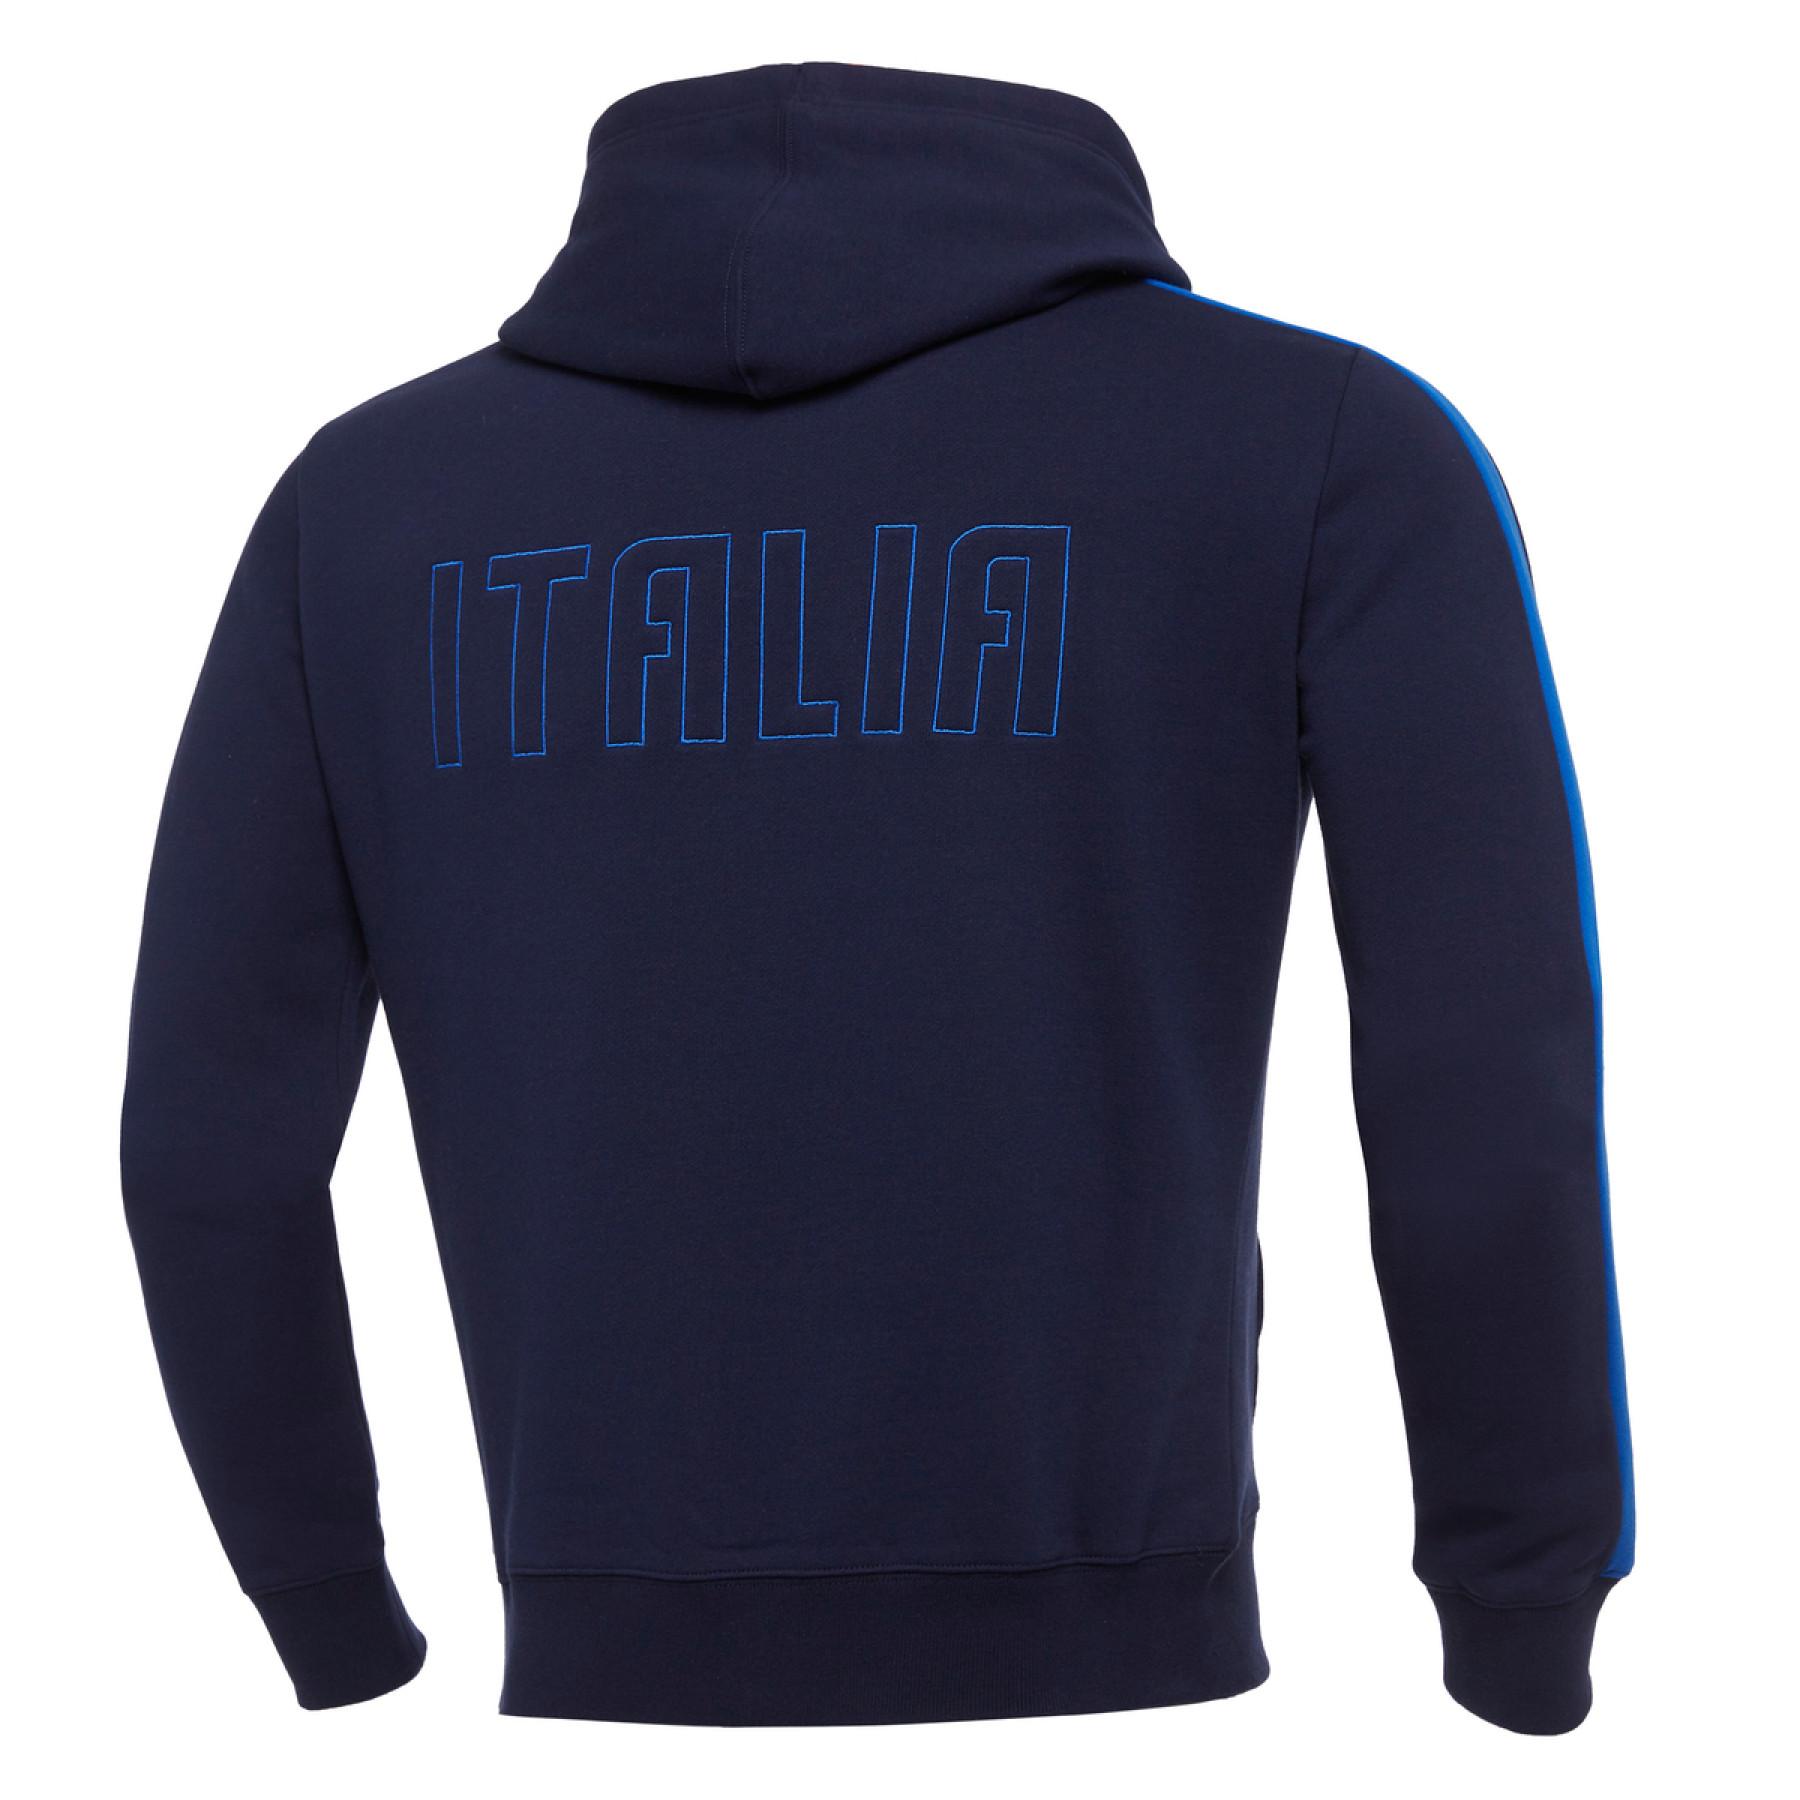 Sweatshirt Italie rubgy 2020/21